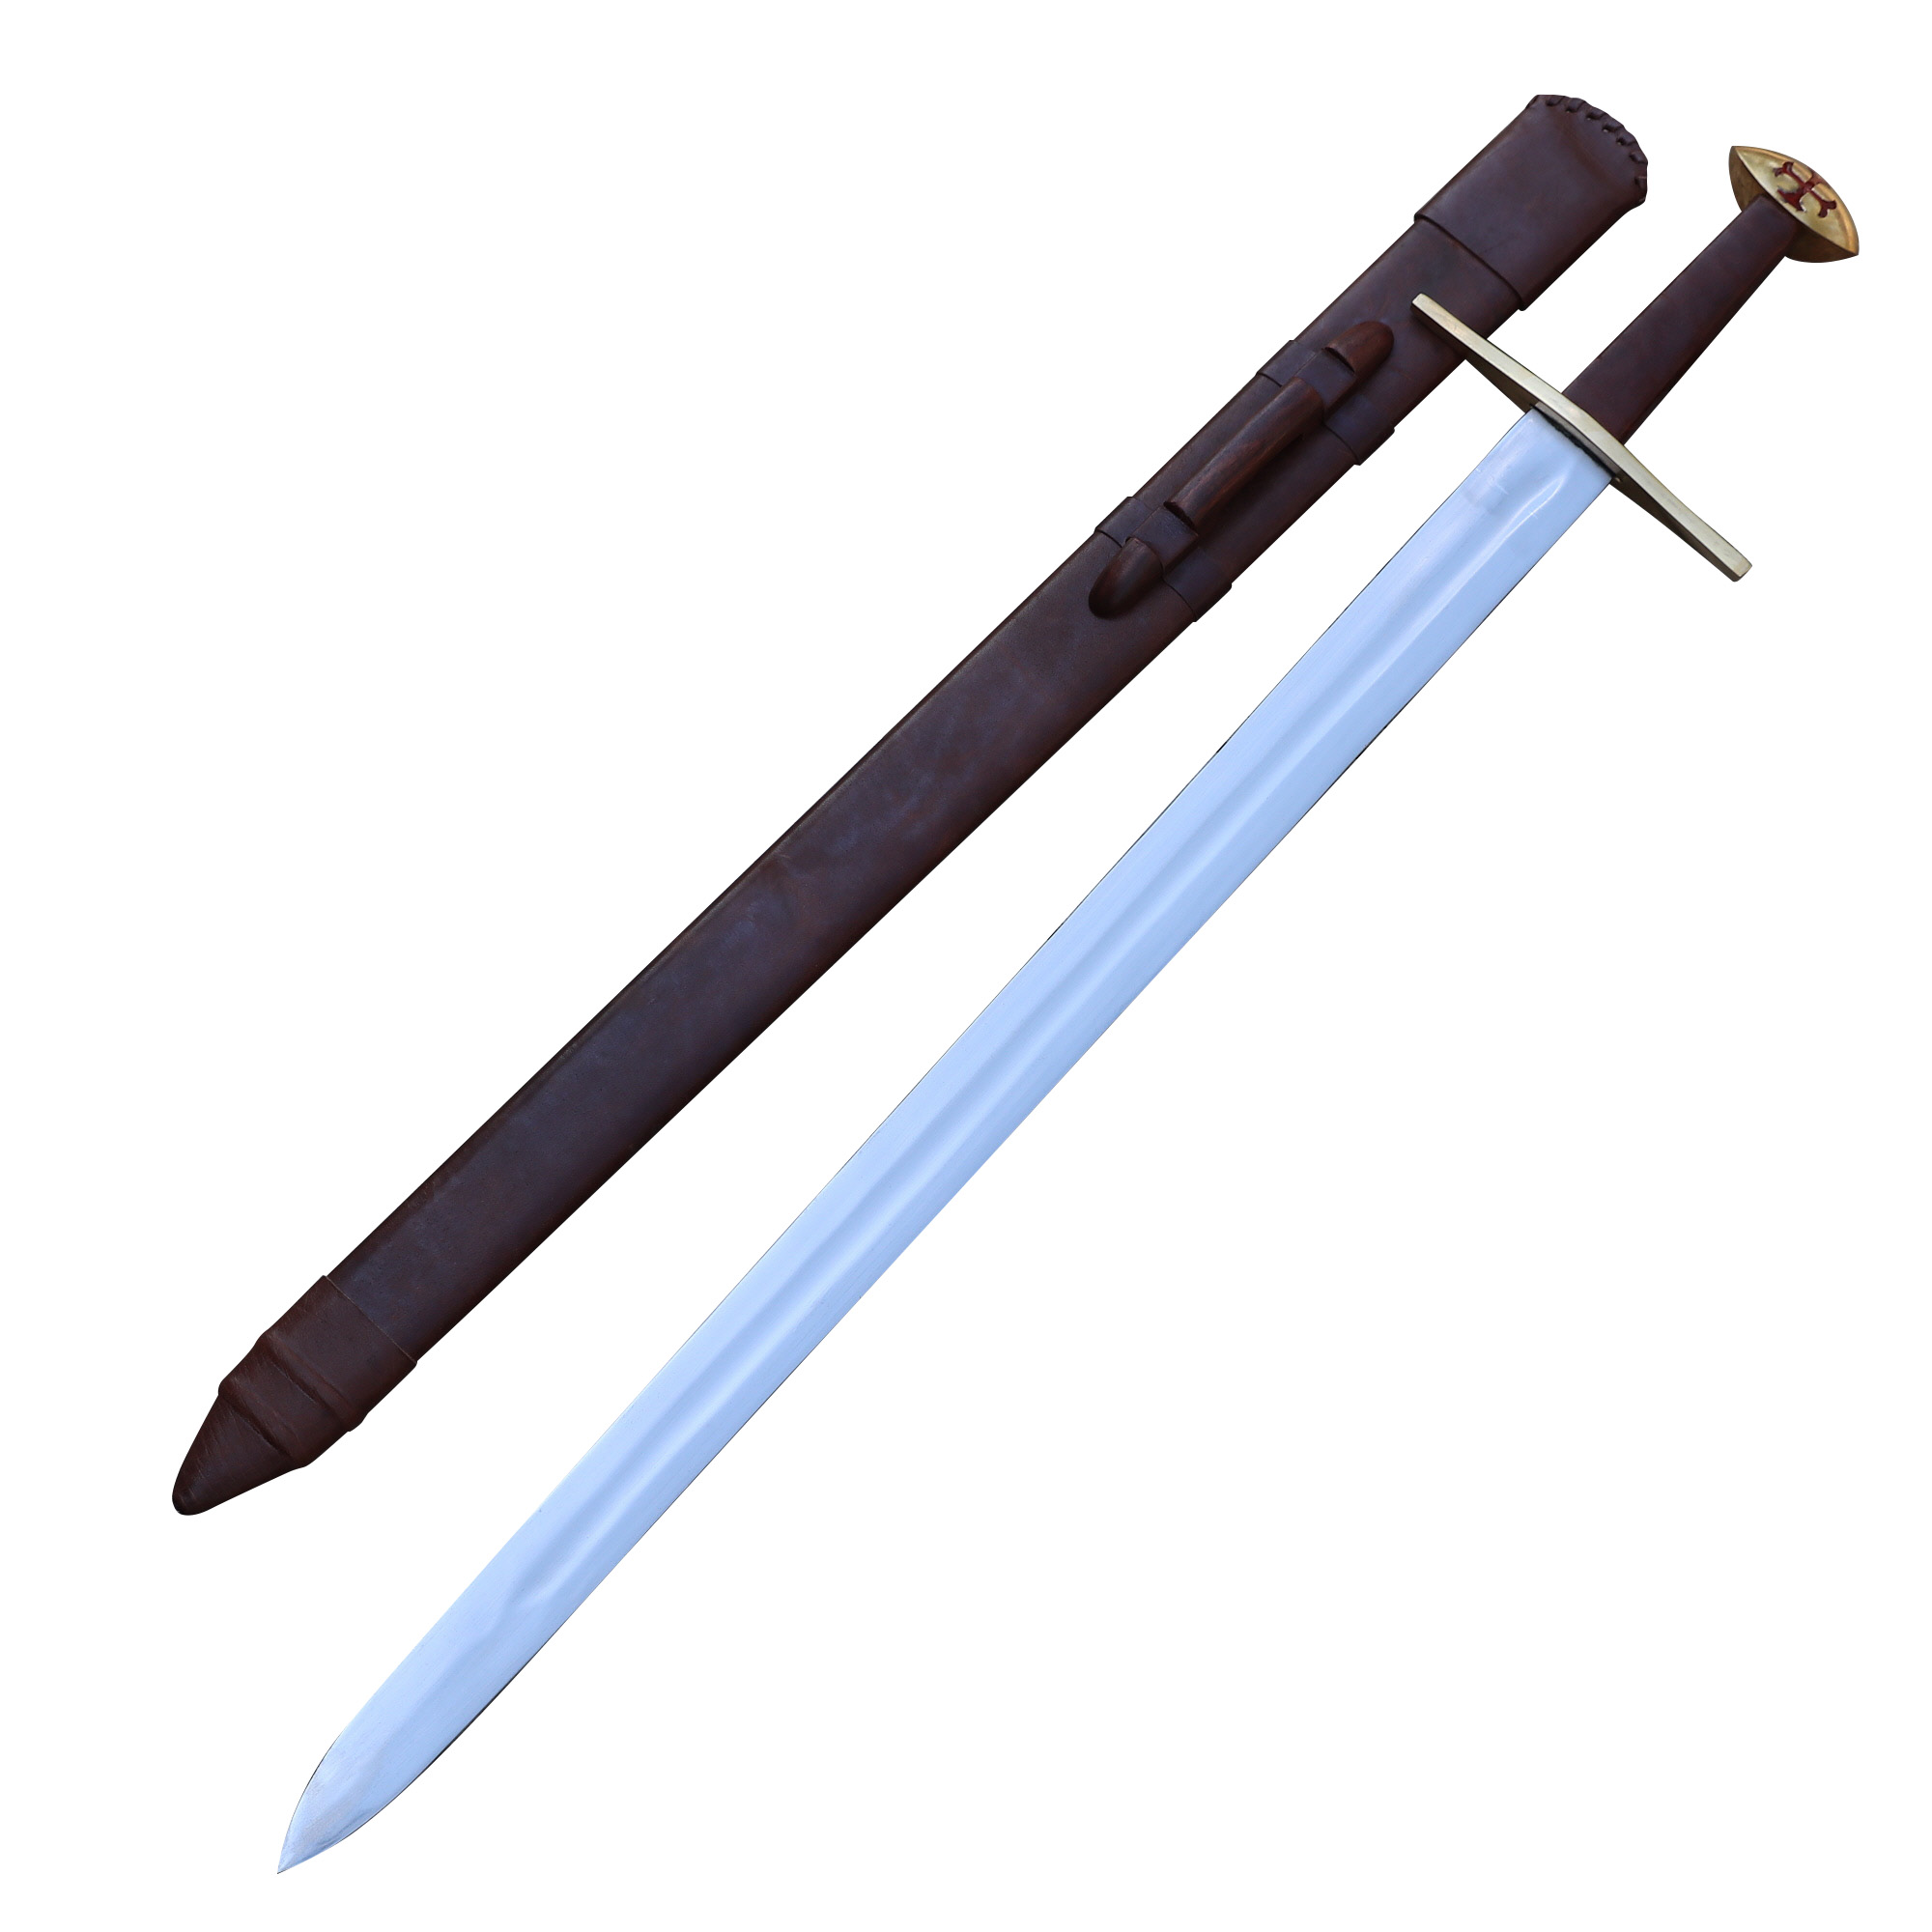 Medieval European Functional Full Tang EN45 High Carbon Steel Knightly Arming SWORD with Templar Cro